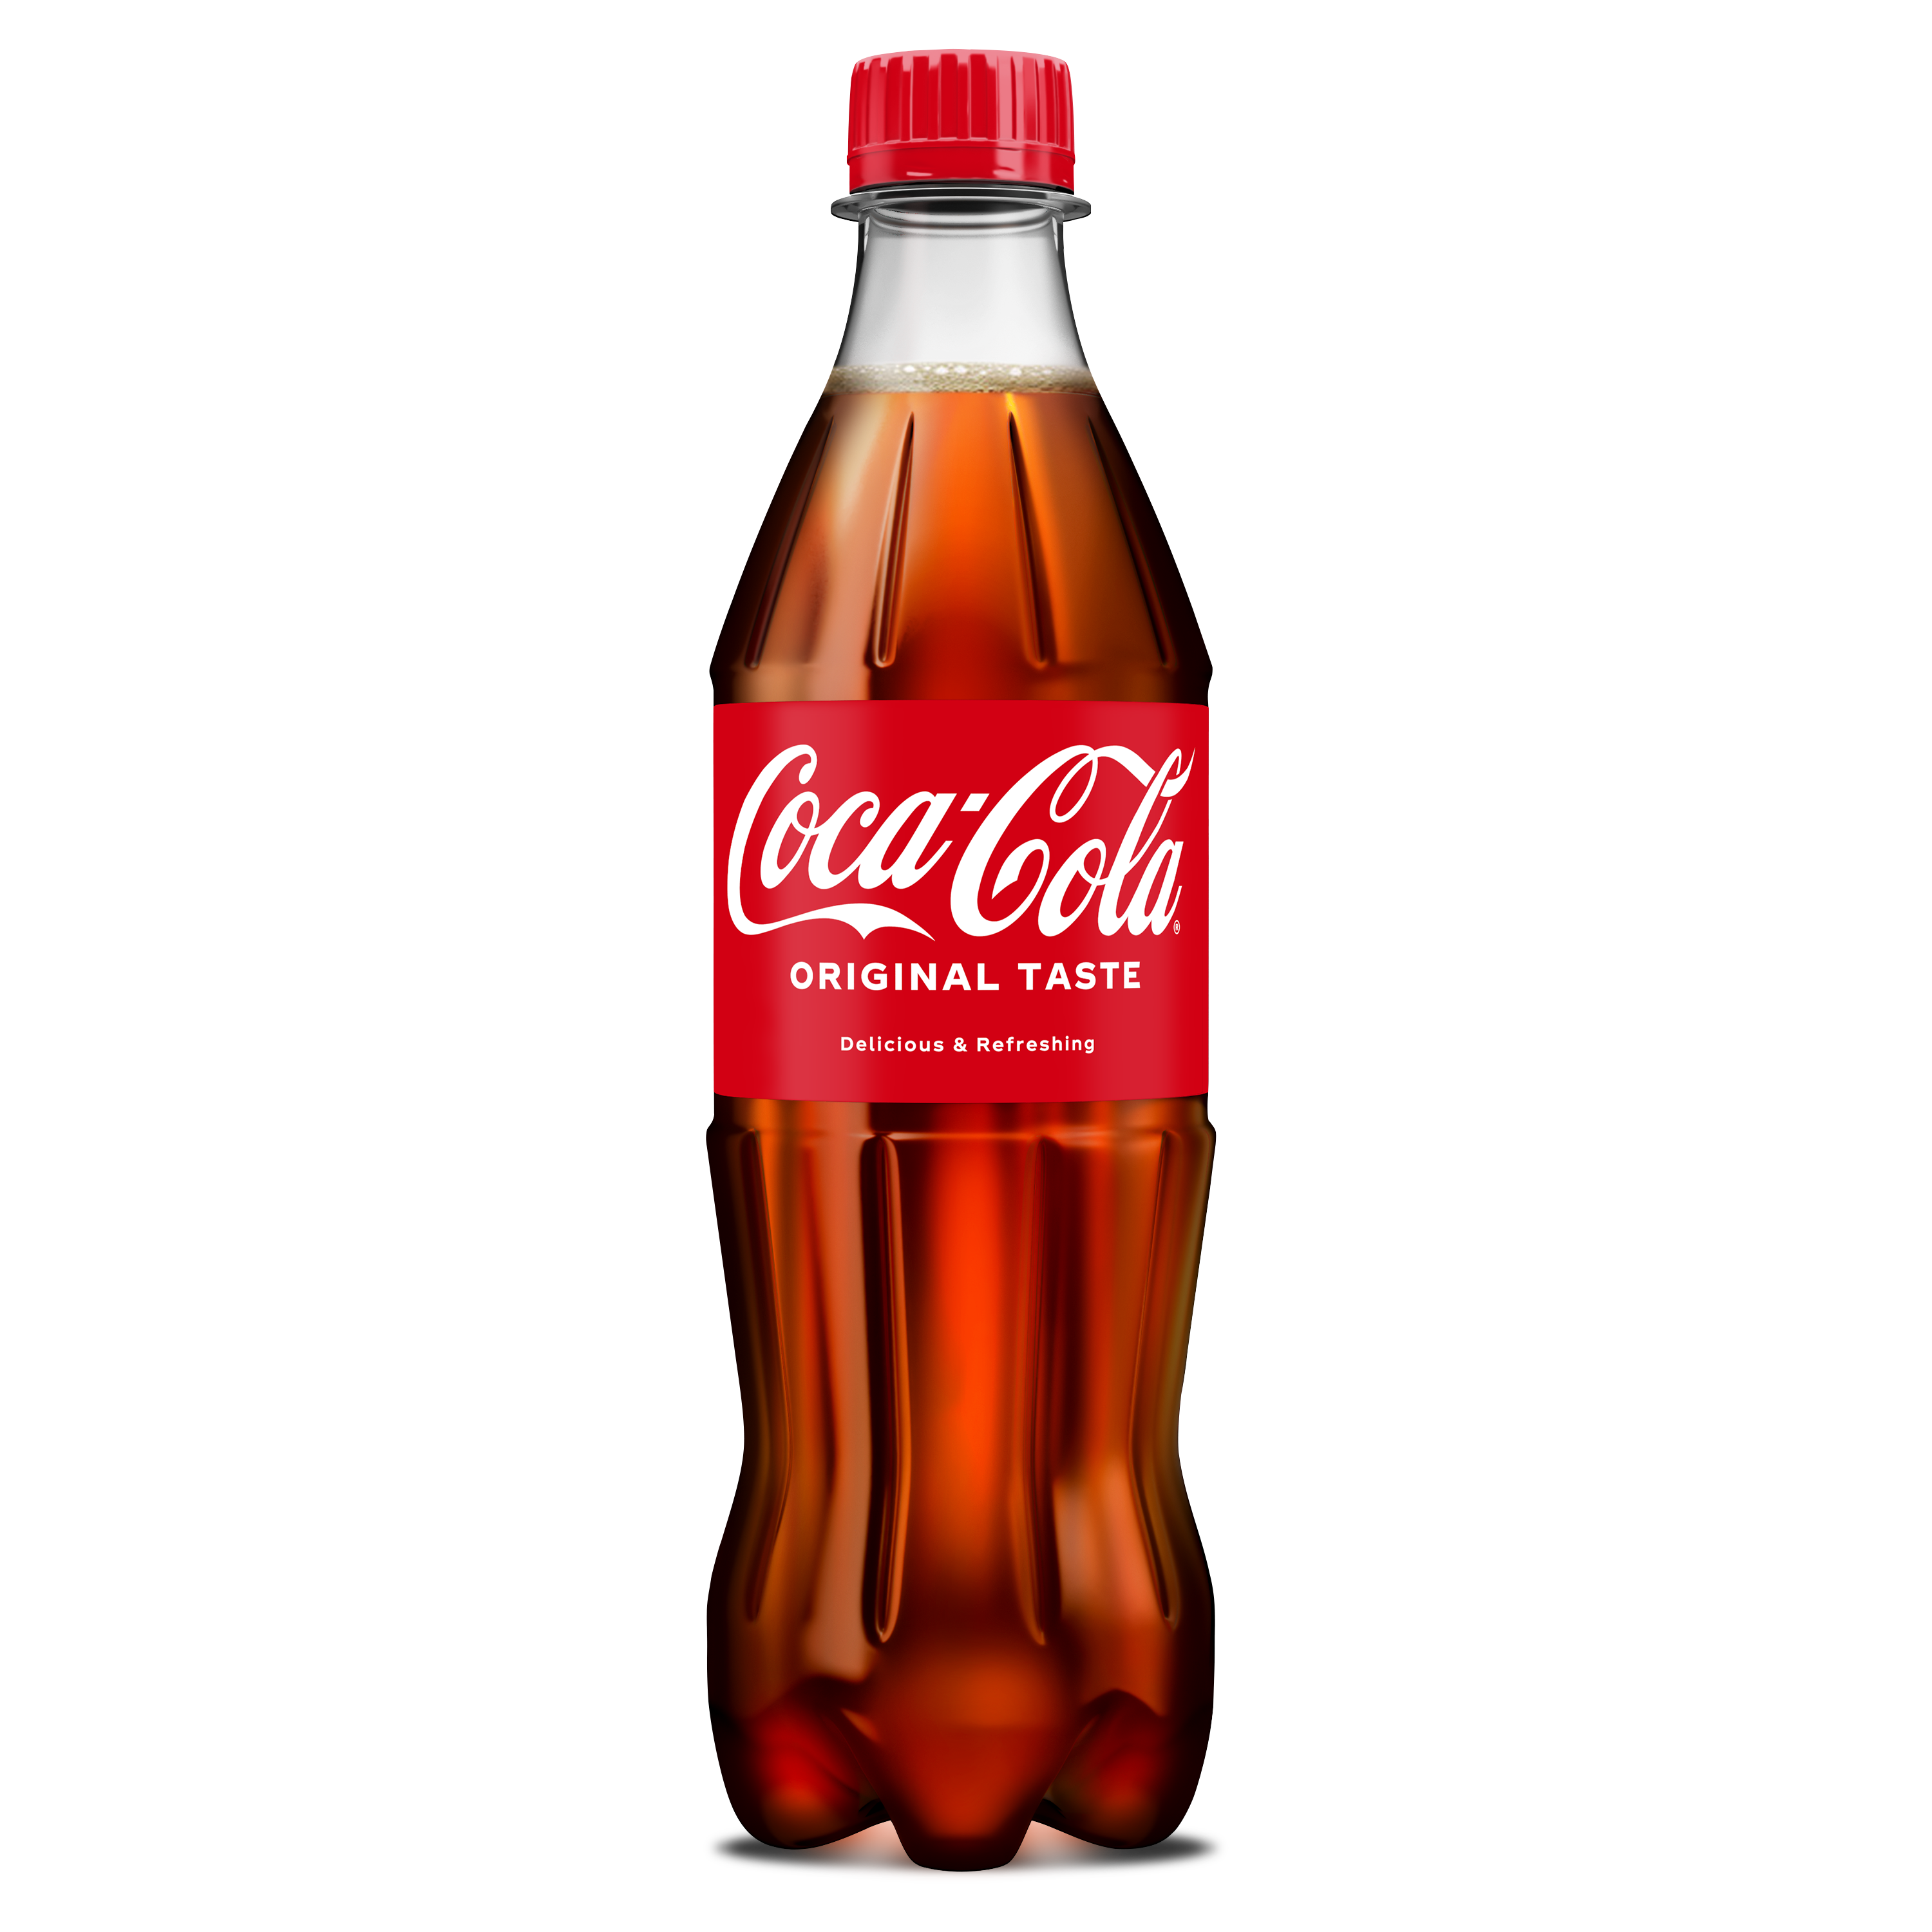 Ena plastenka Coca-Cole s prvotnim okusom.